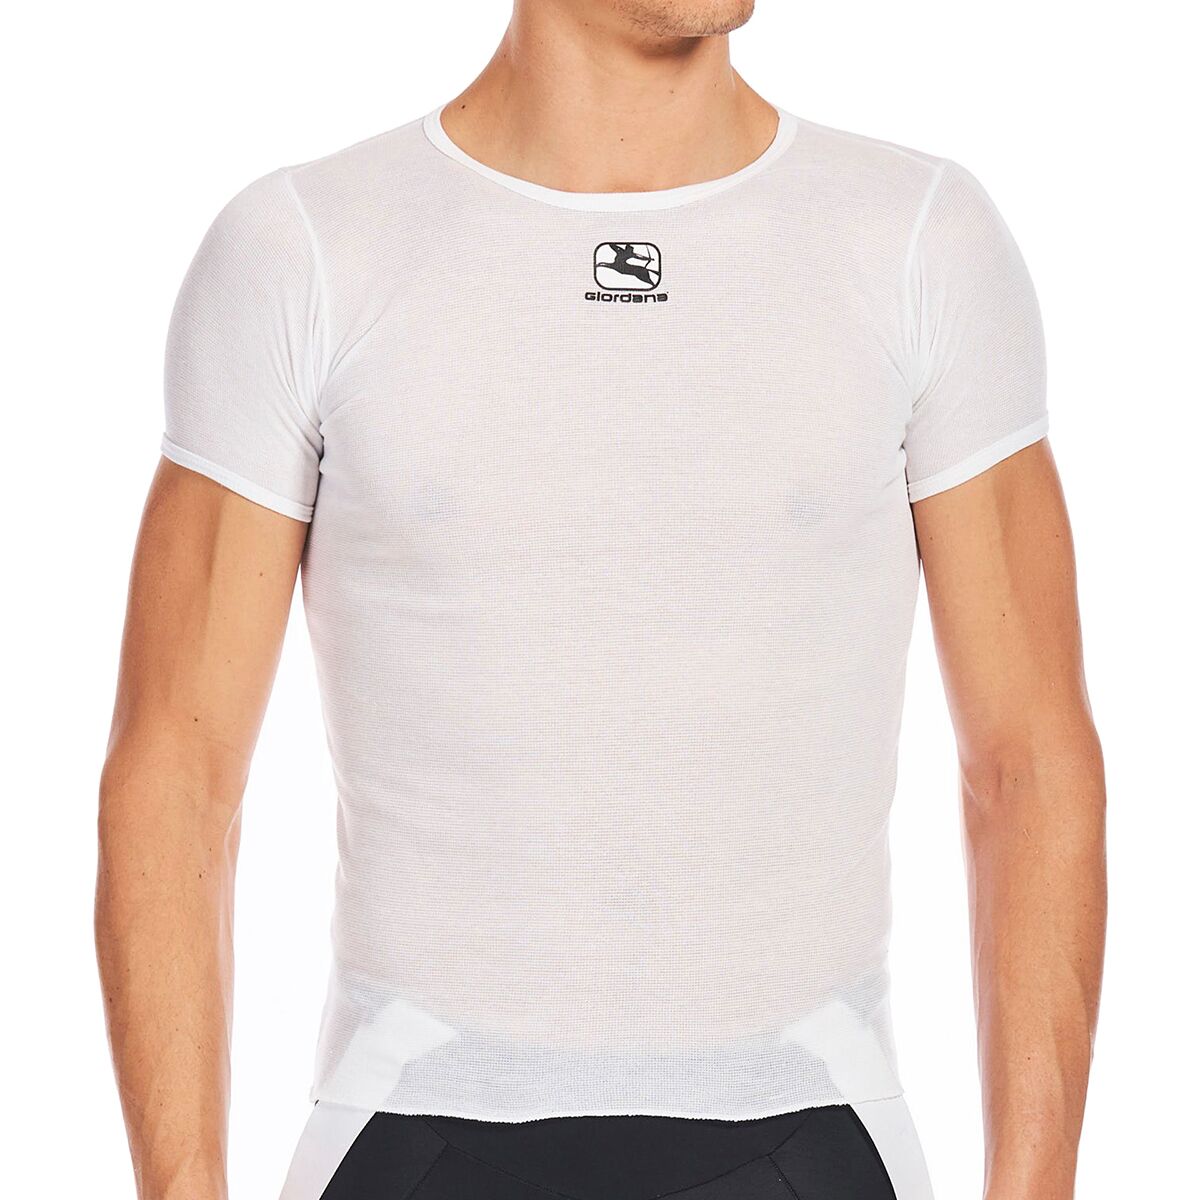 Giordana Sport Short-Sleeve Baselayer - Men's White, Medium